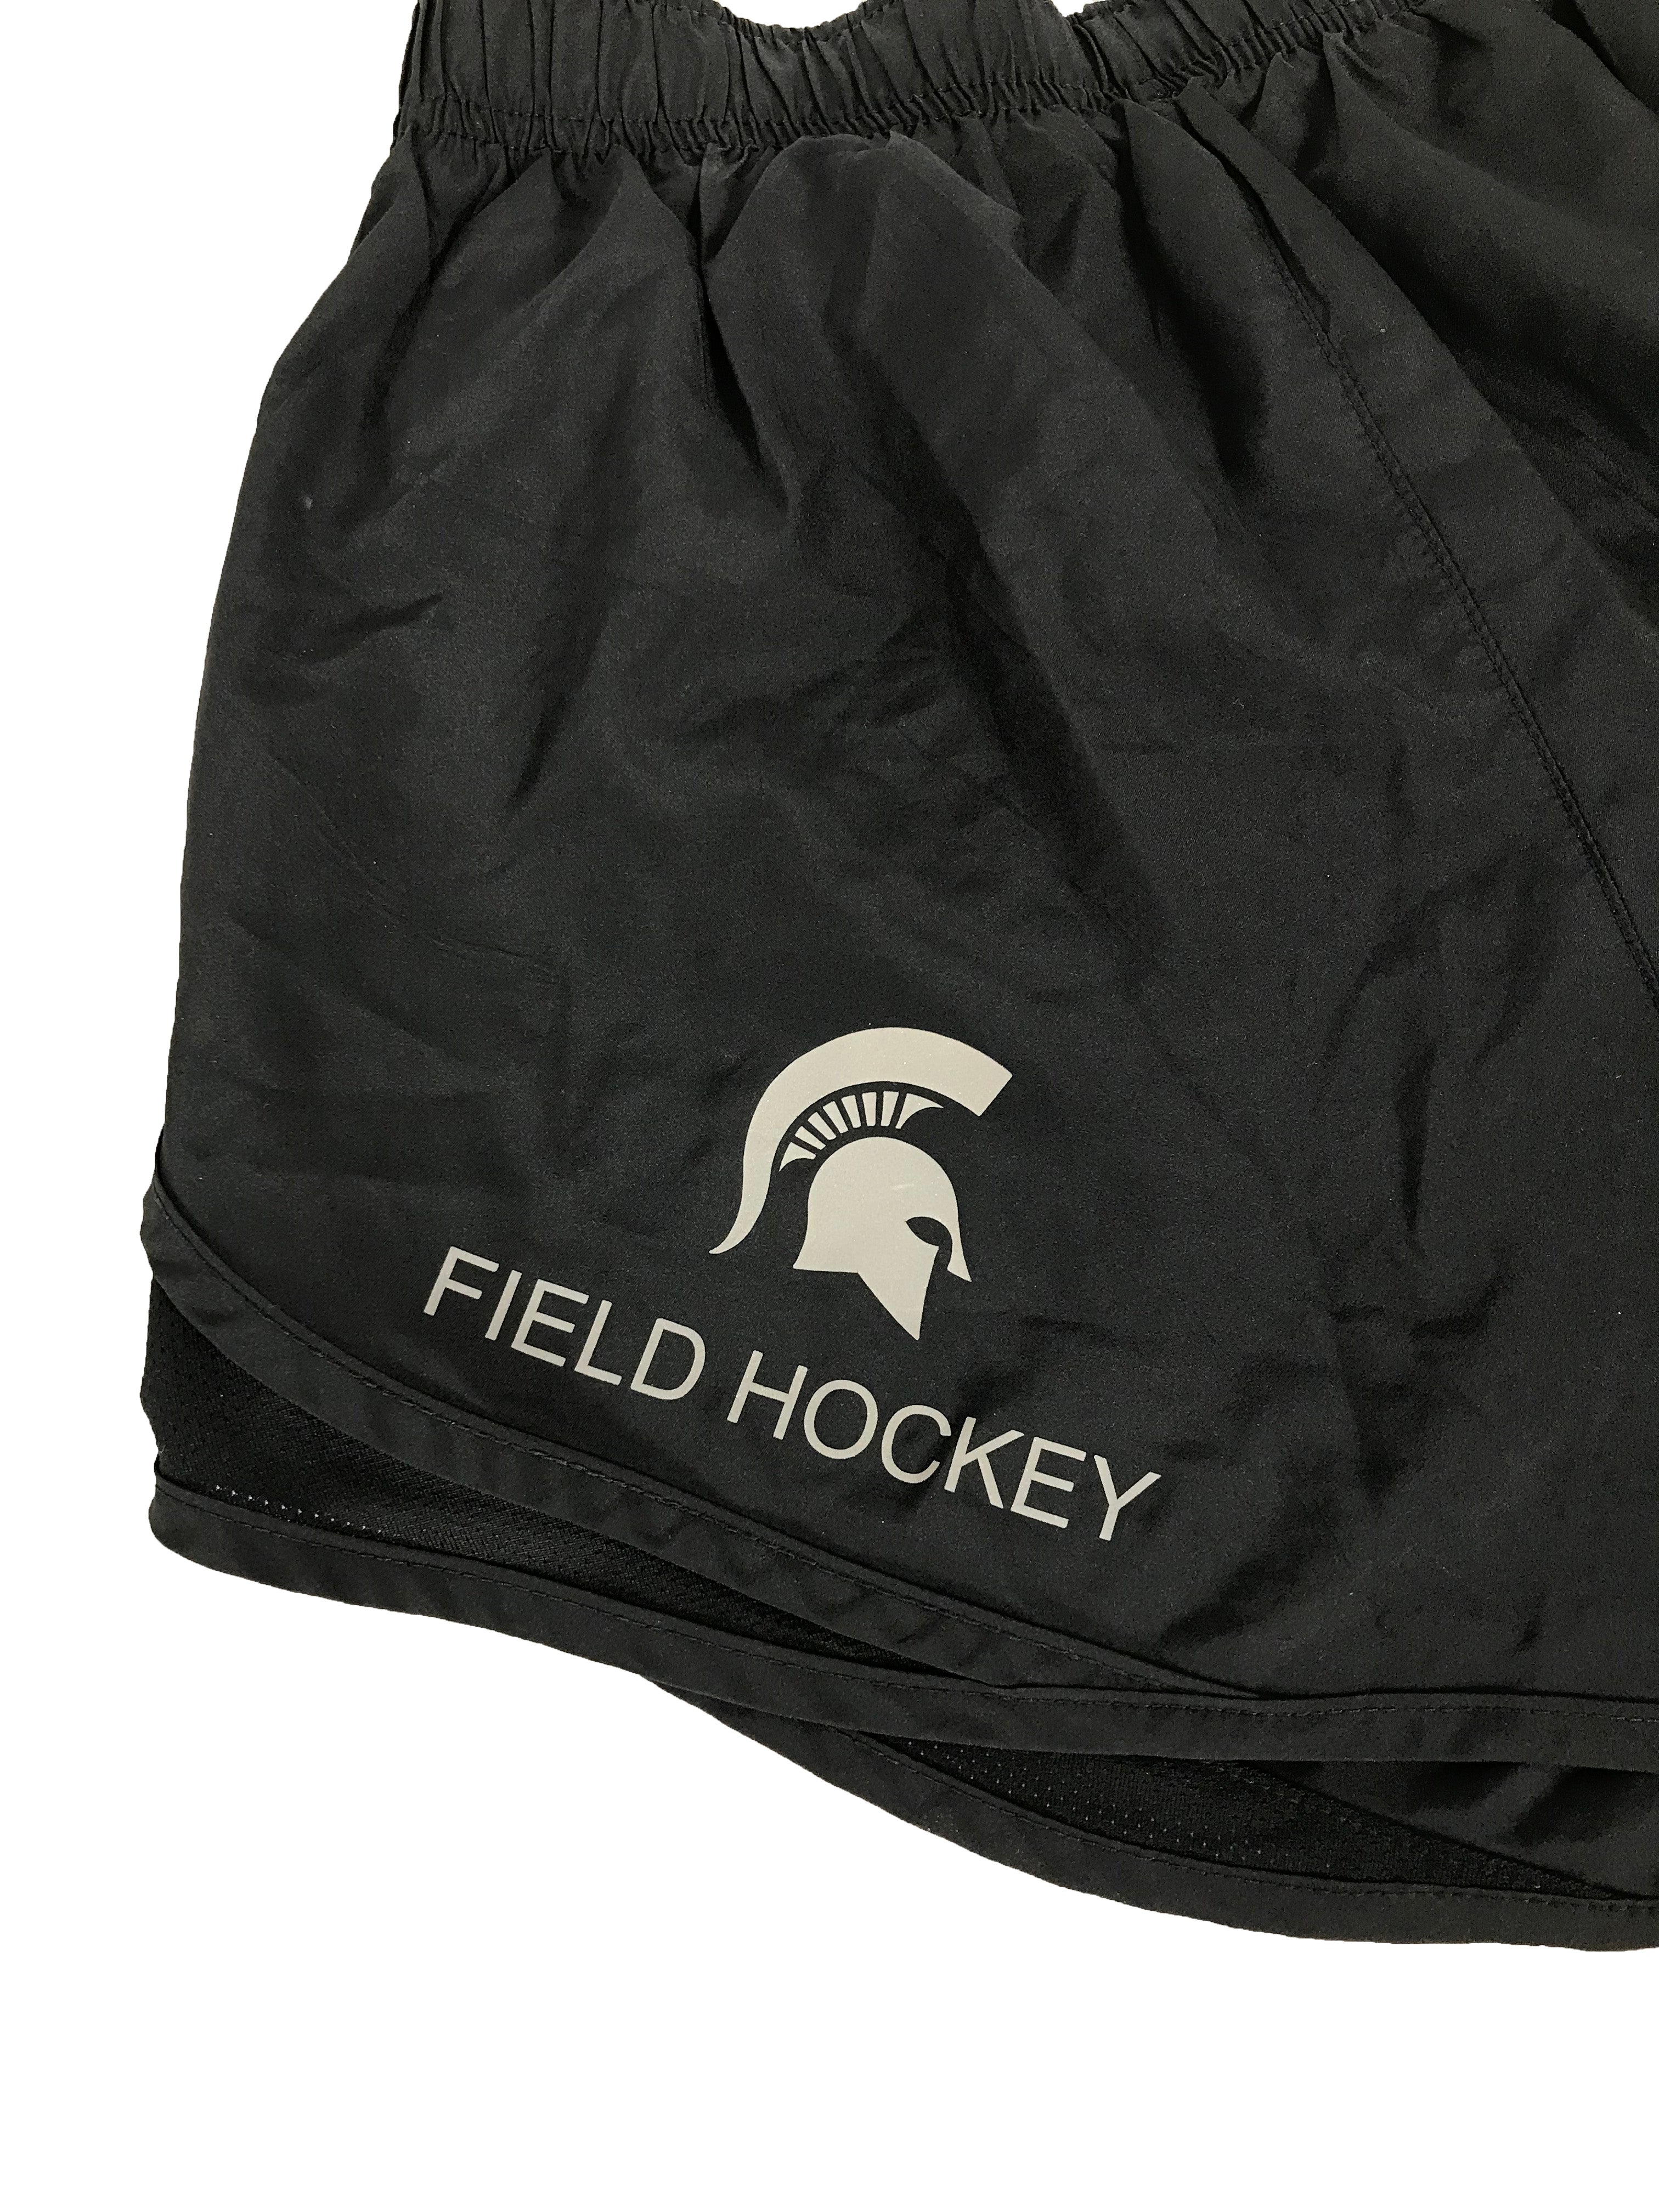 Nike Dri-Fit Michigan State University Field Hockey Black Shorts Women's Size L